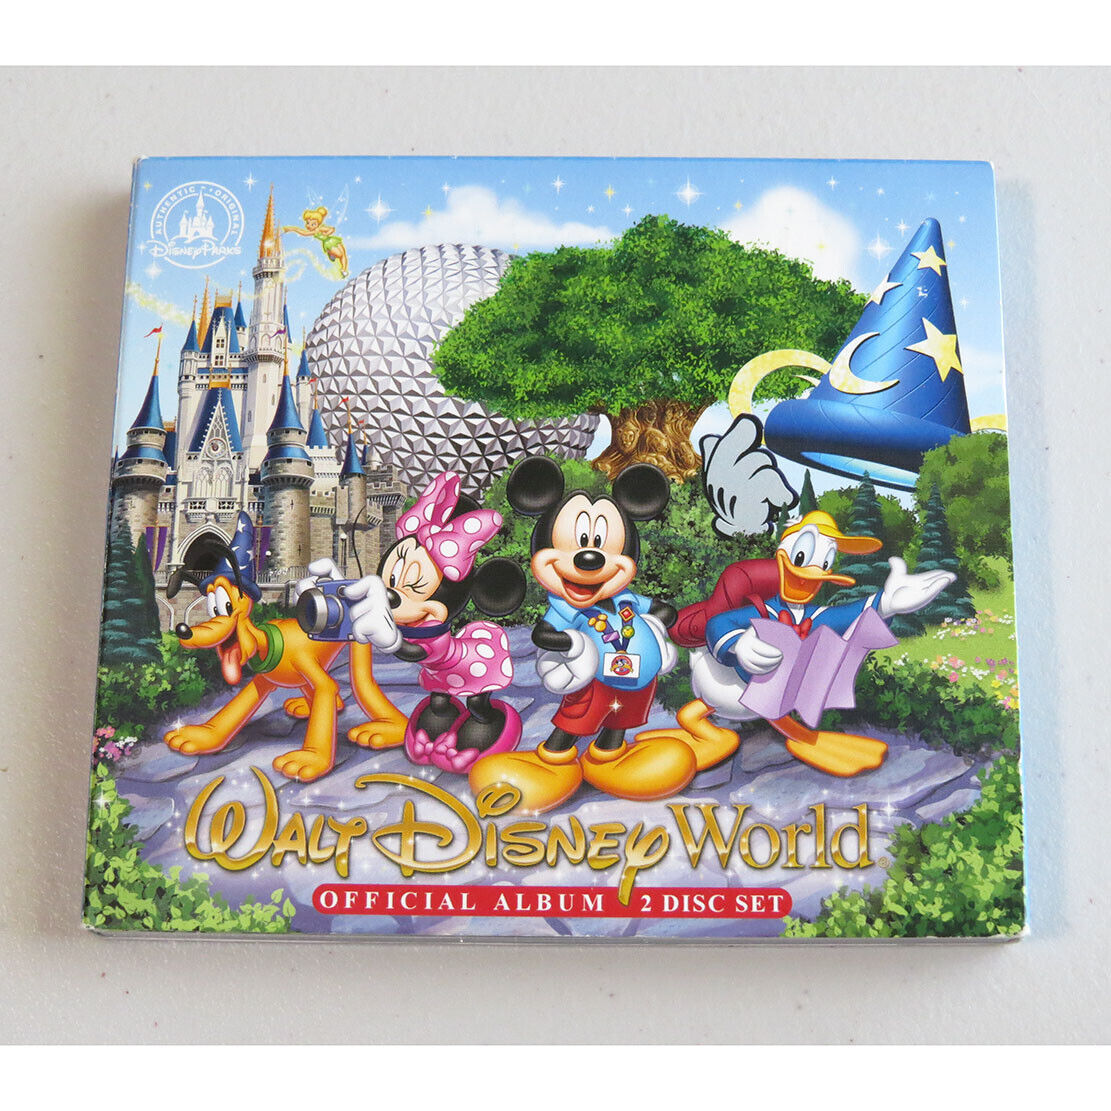 Walt Disney World Official Album 2 Disc Set (Audio CD) Disney Parks TESTED